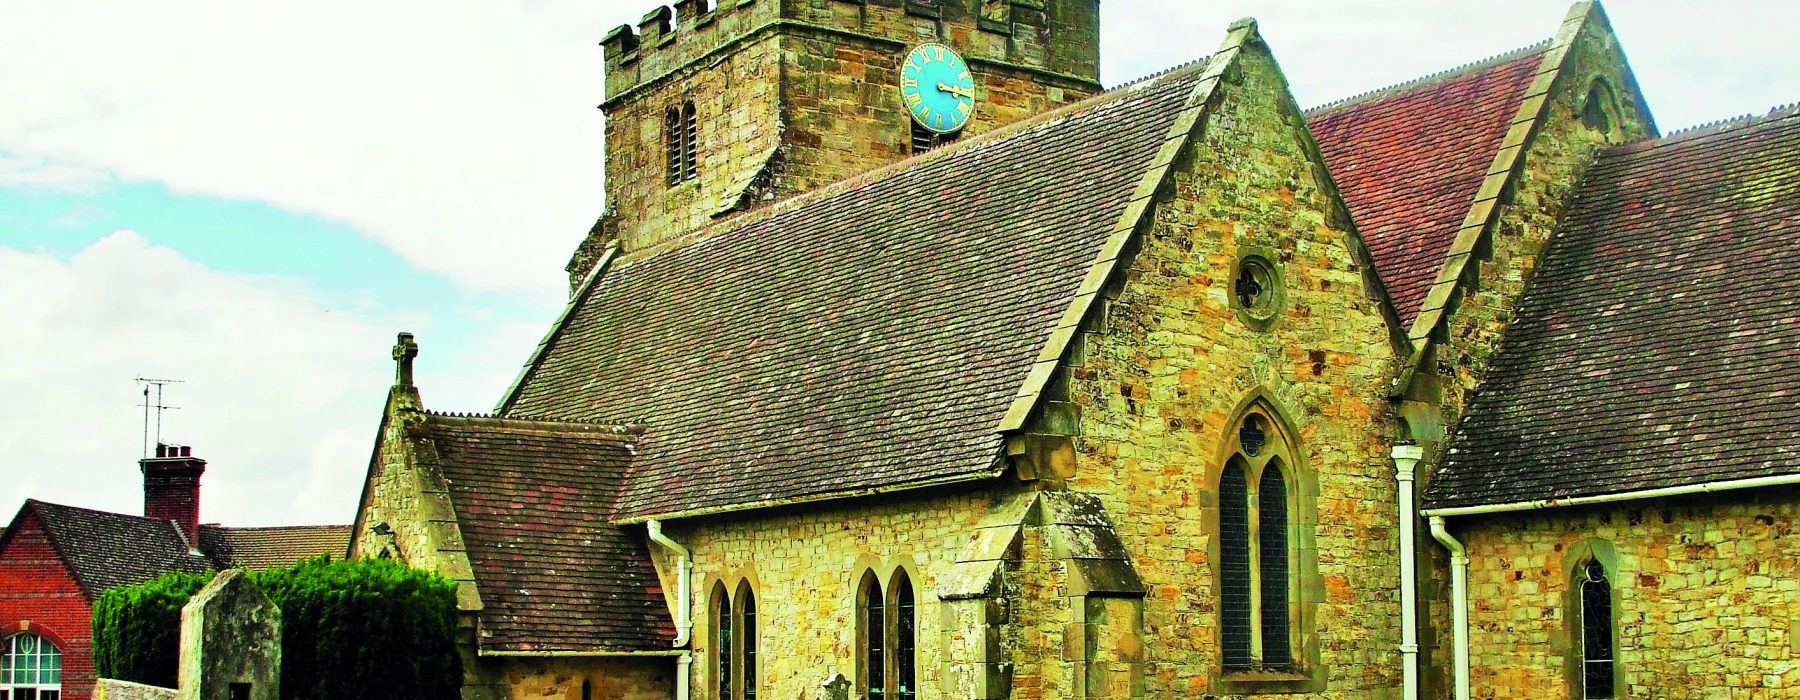 East Hoathly Parish East Hoathly Parish Church-grassrootsgroundswell/Flikr.com